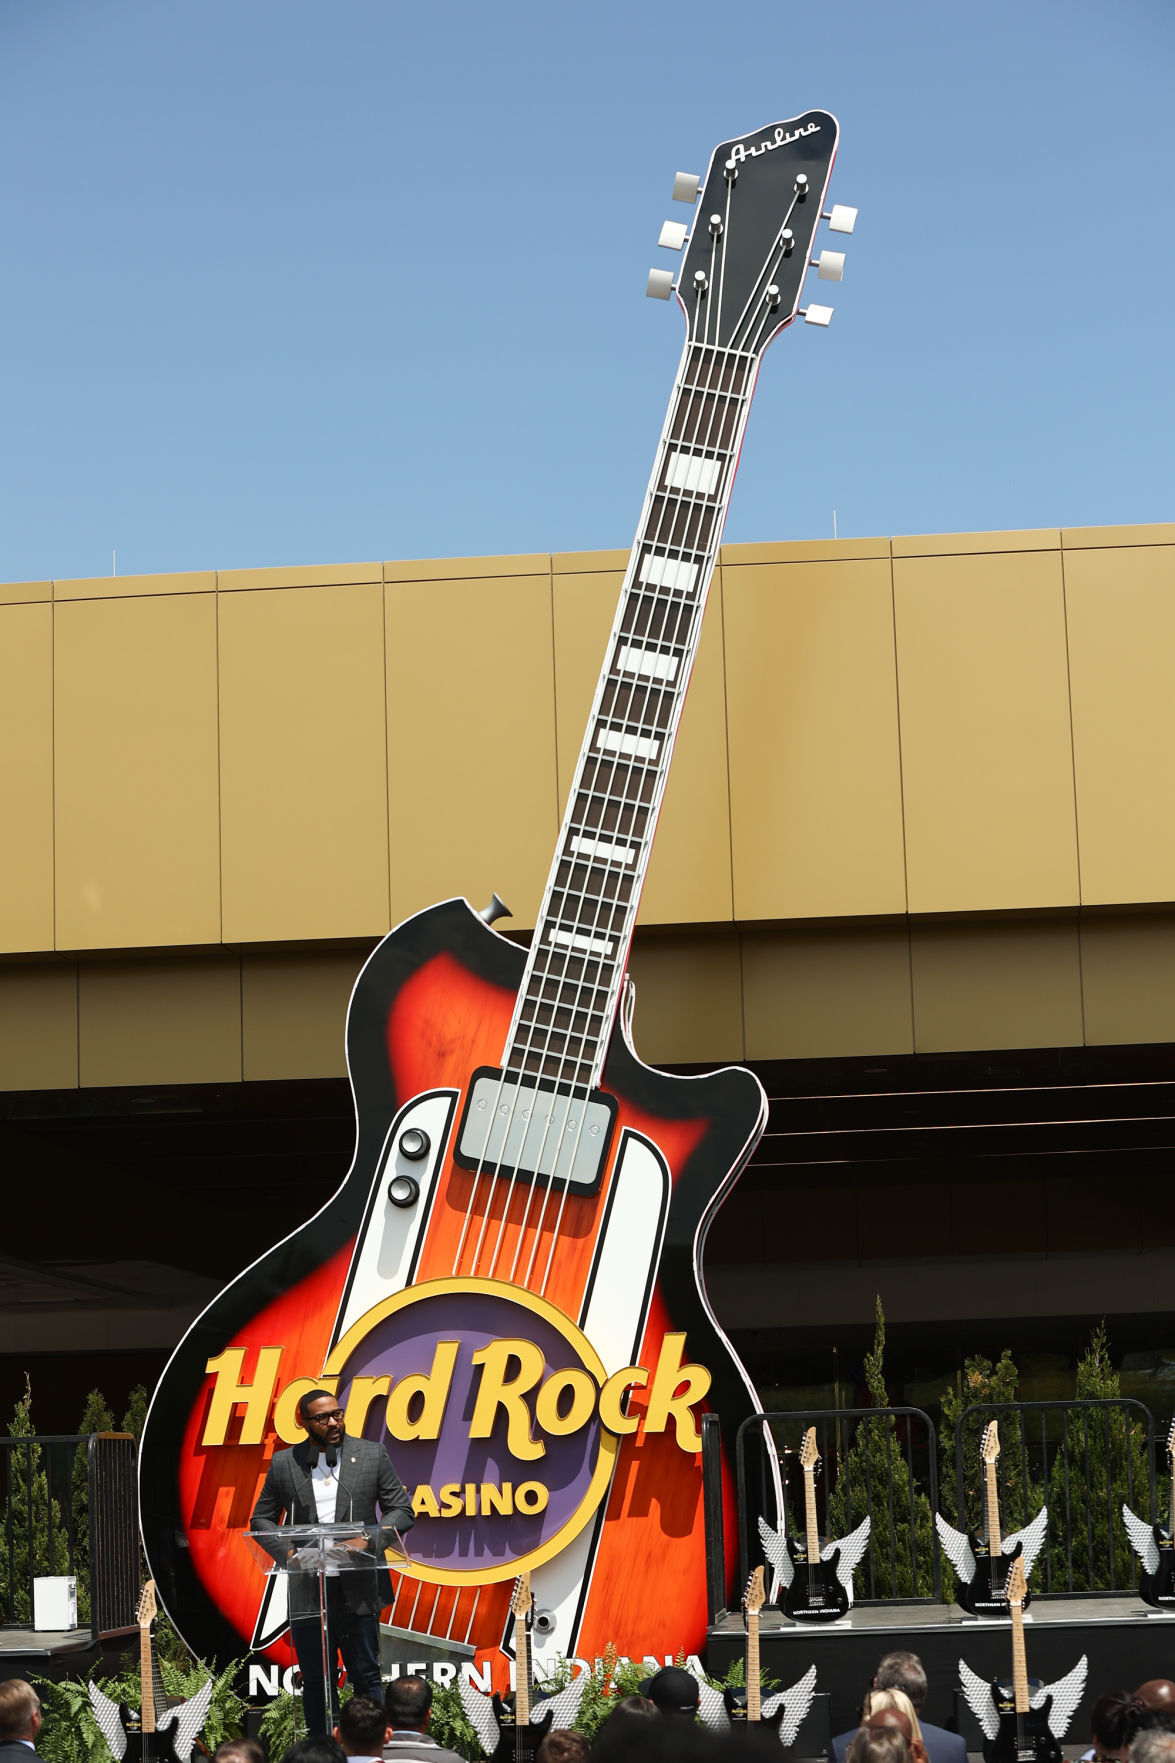 Hard Rock Casino opens